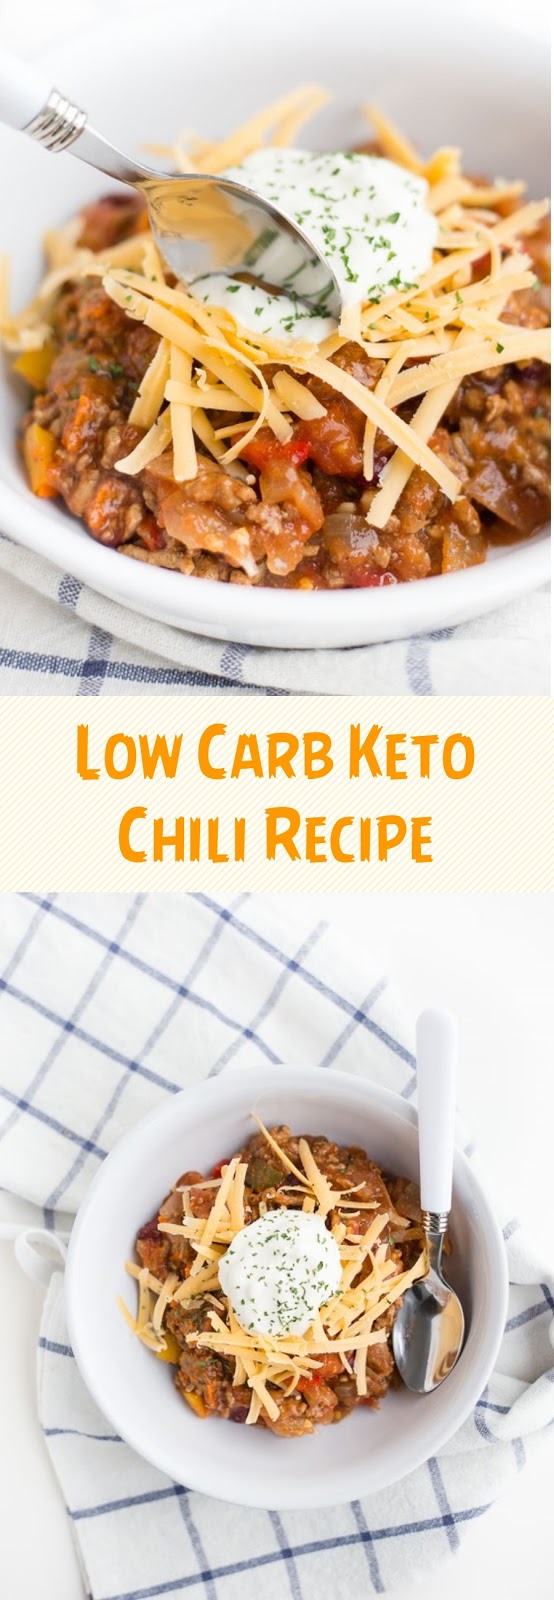 Low Carb Keto Chili Recipe